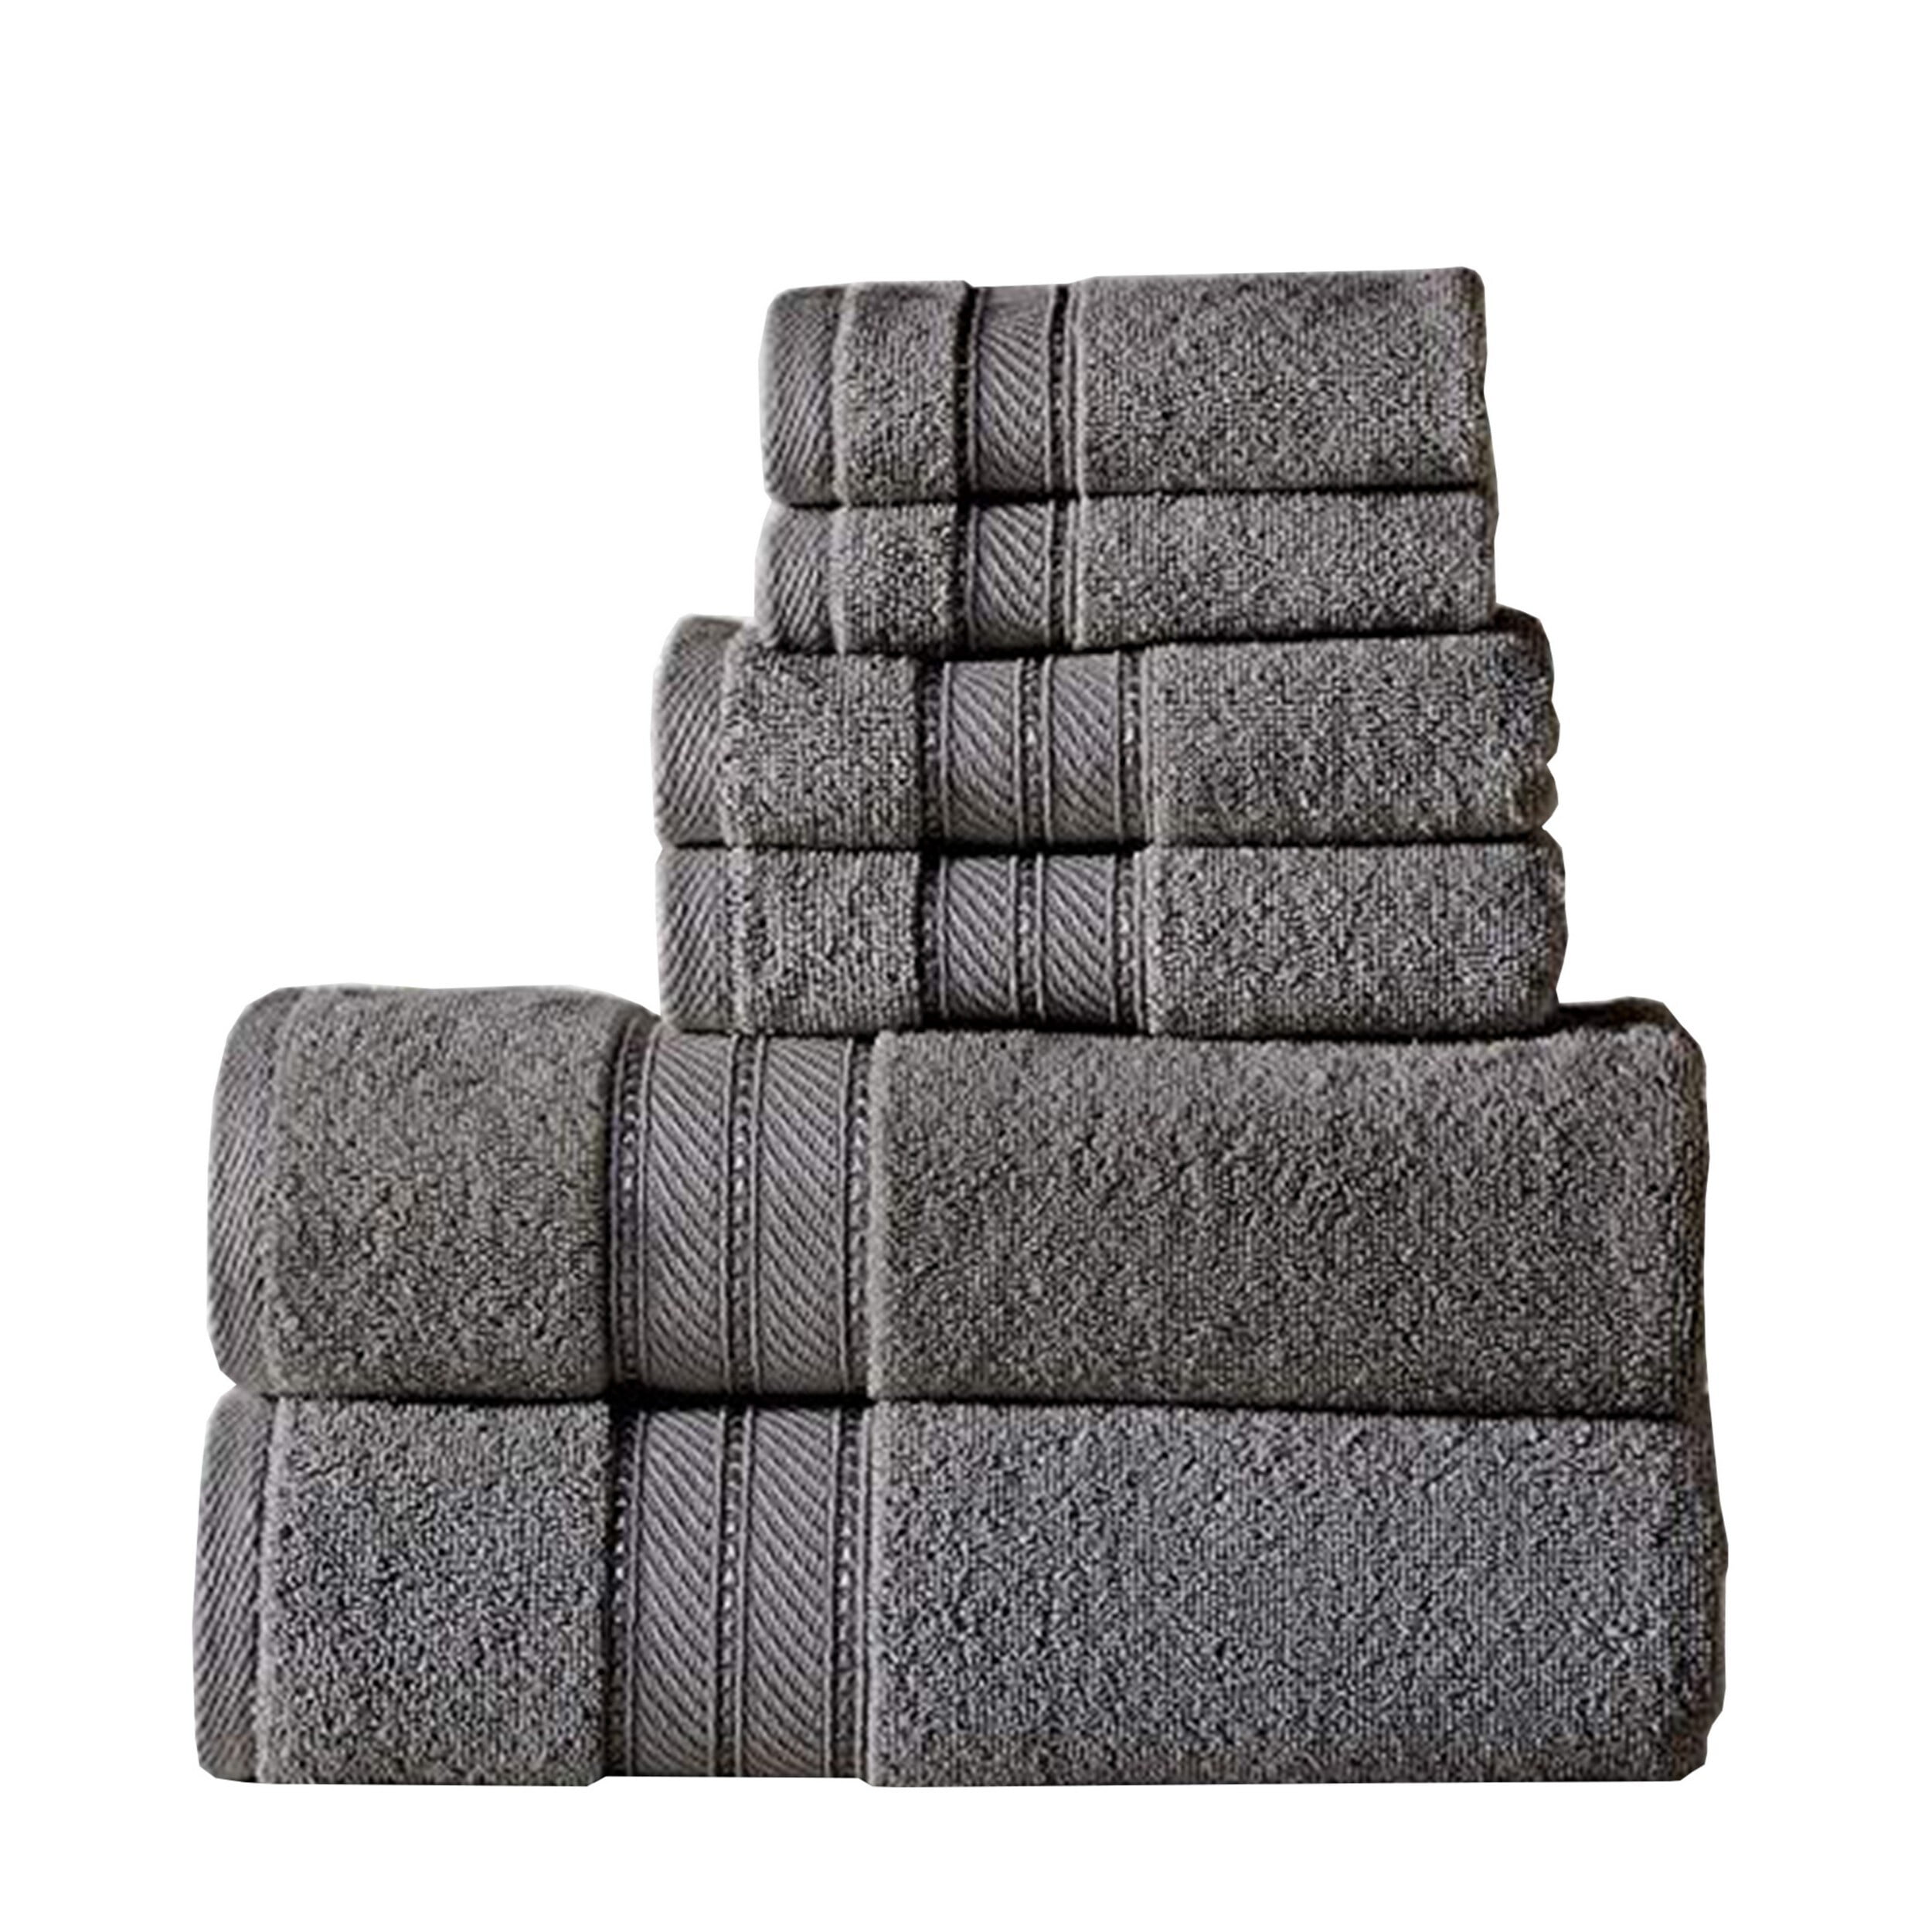 Picture of The Urban Port BM222884 Bergamo Spun Loft Towel Set with Twill Weaving, Charcoal Gray - 6 Piece